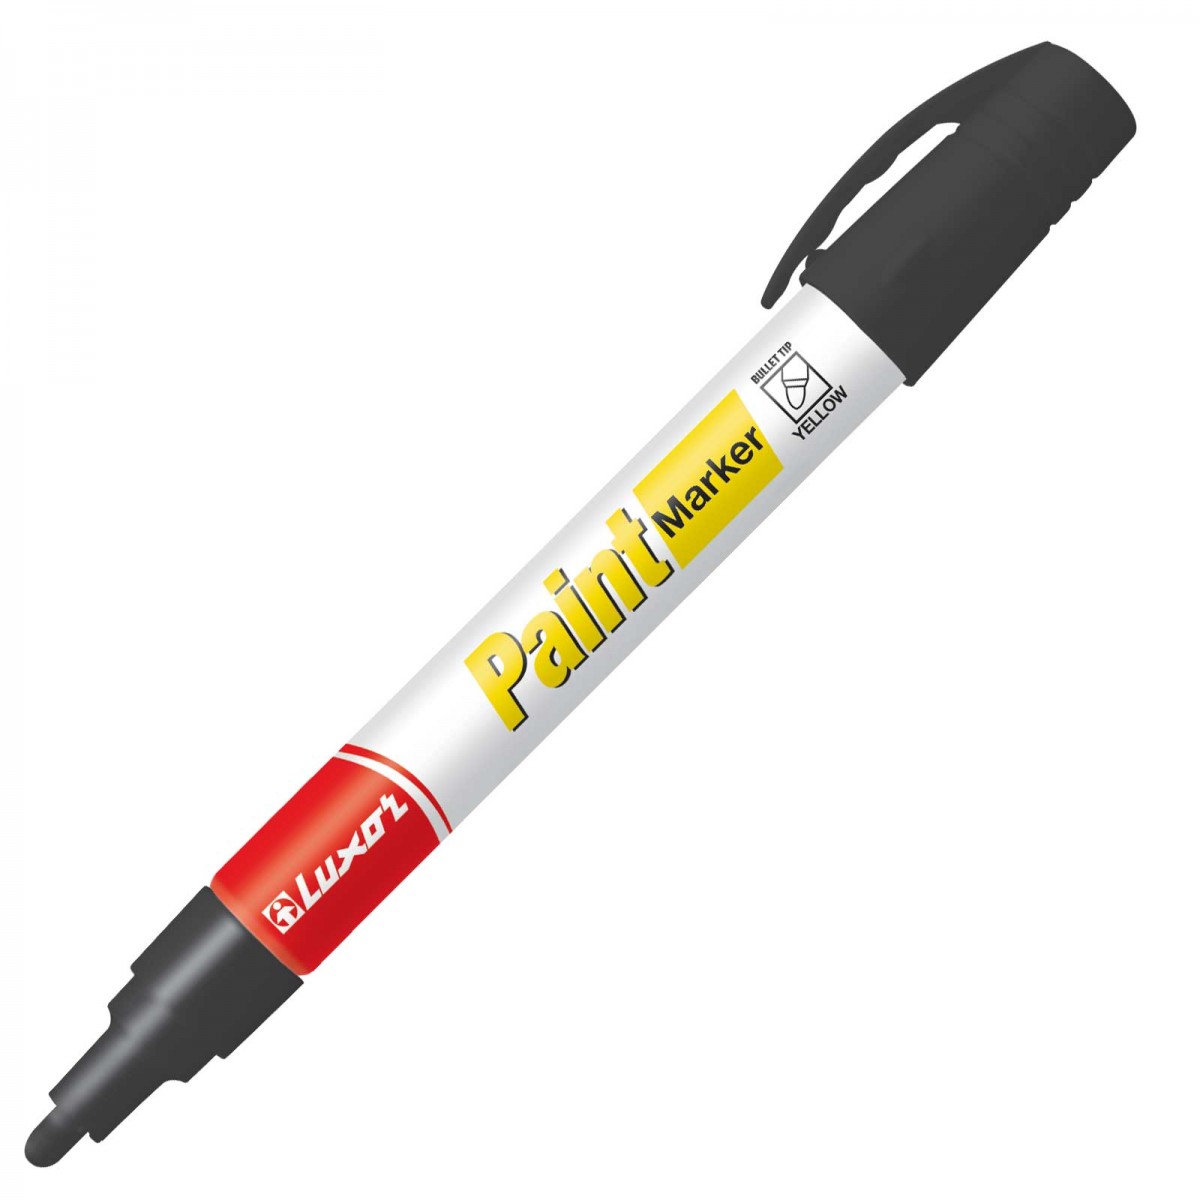 Маркер черный 4 мм. Luxor маркер 3281. Перманентный маркер Luxor 810 черный. Маркер перманентный Luxor Eco 20 (красн). Маркер-краска Paint Marker 4 черный.